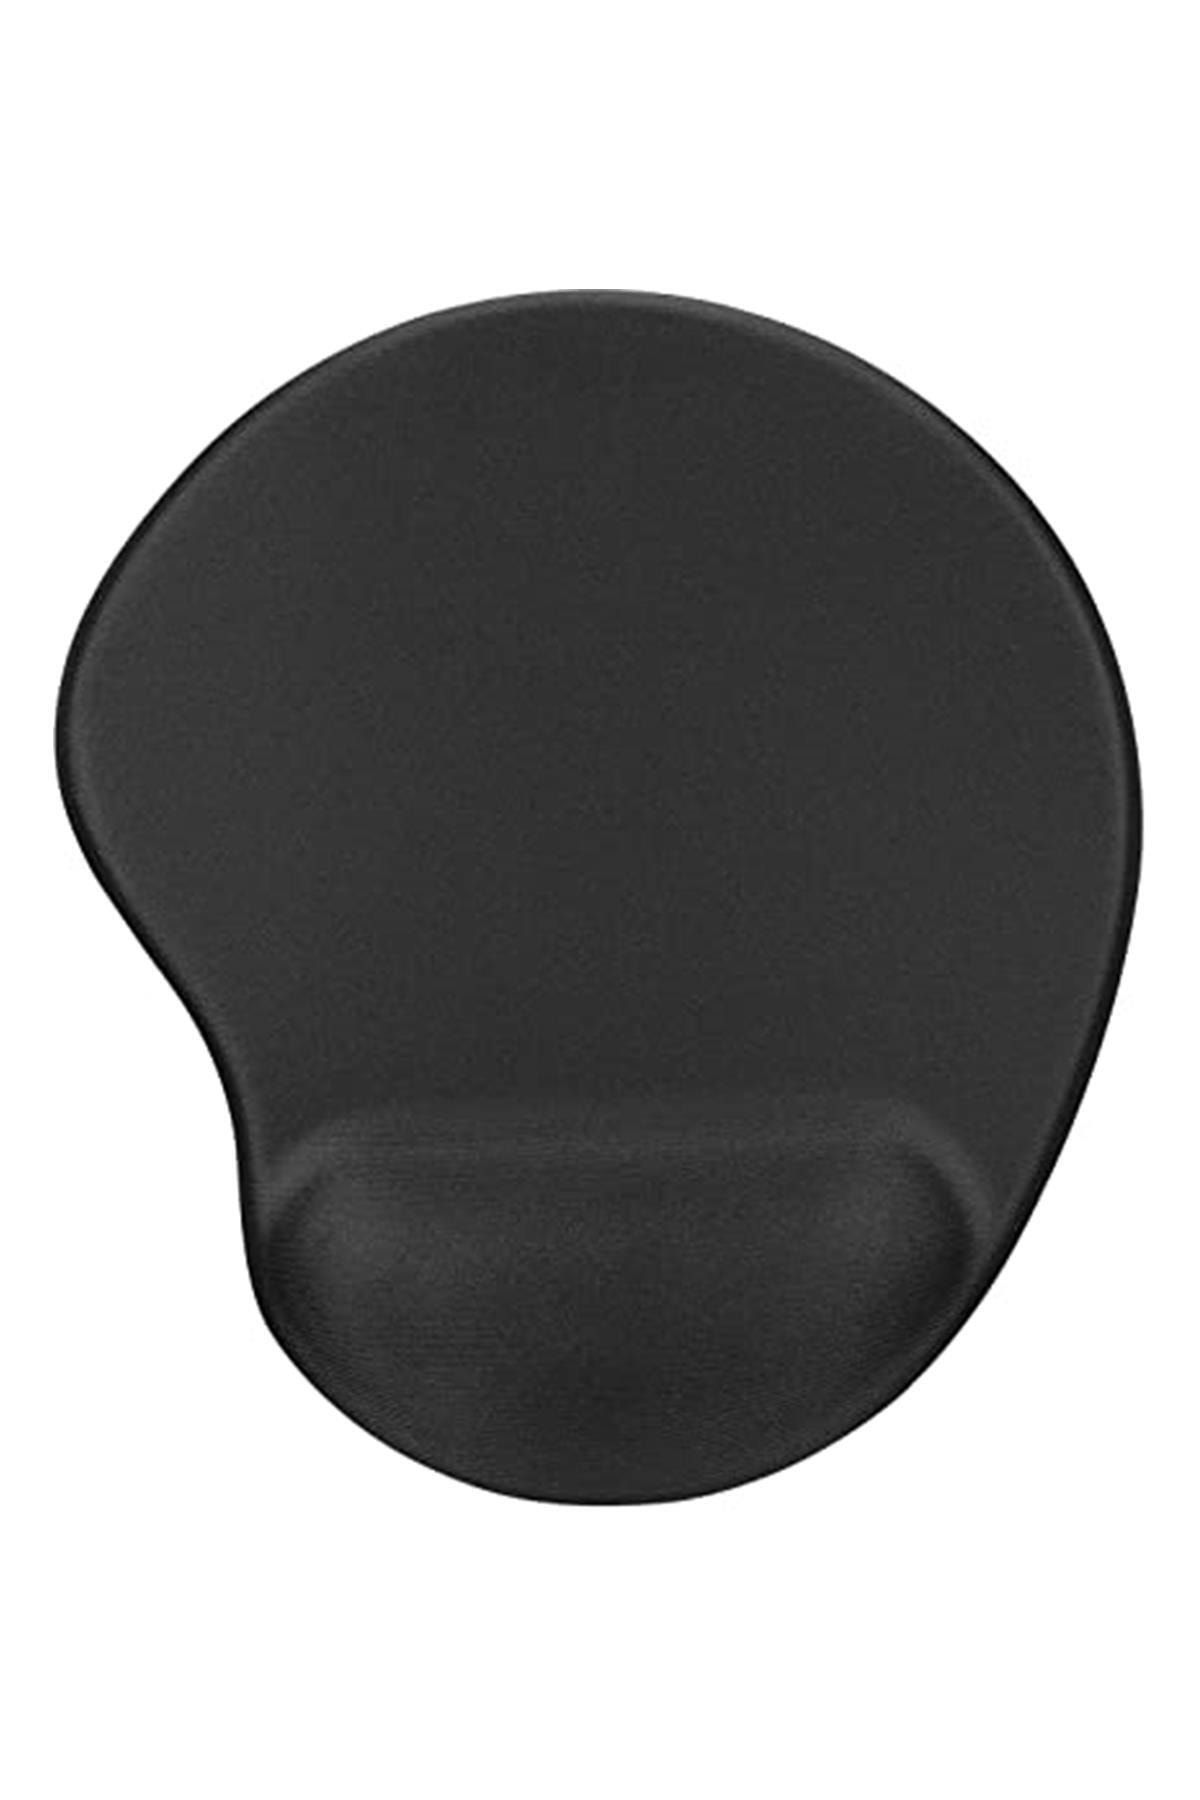 Addison 300522 Siyah Bileklikli Mouse Pad